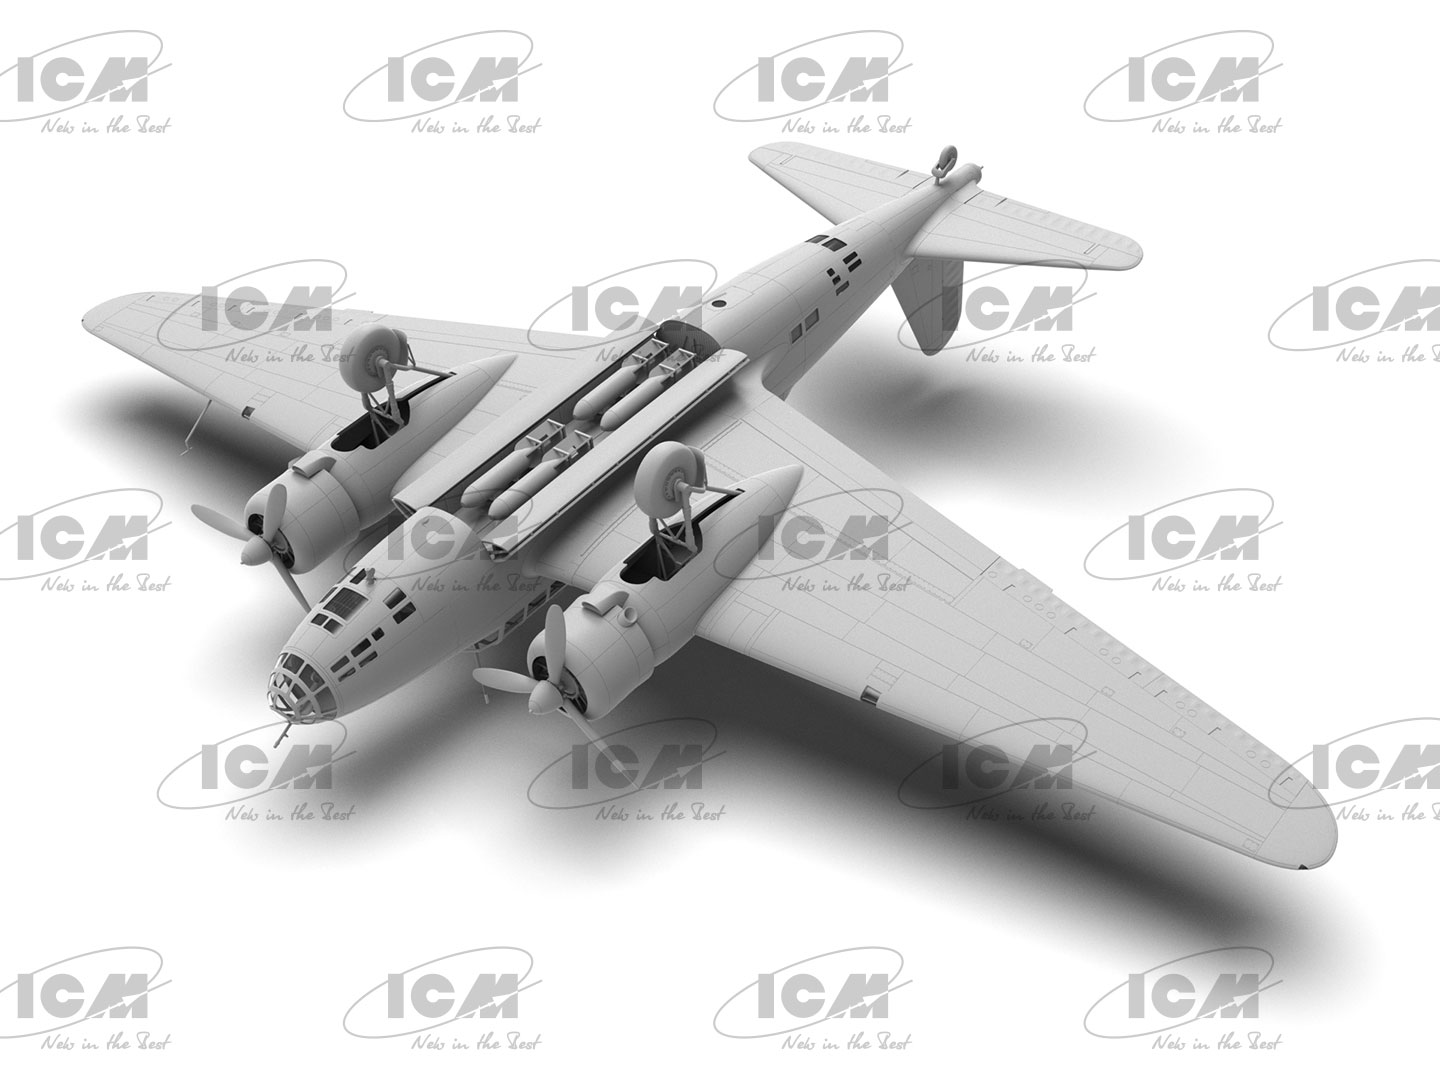 ICM 48195 Ki-21-Ib ‘Sally’ Japanese Heavy Bomber 1/48 model kit